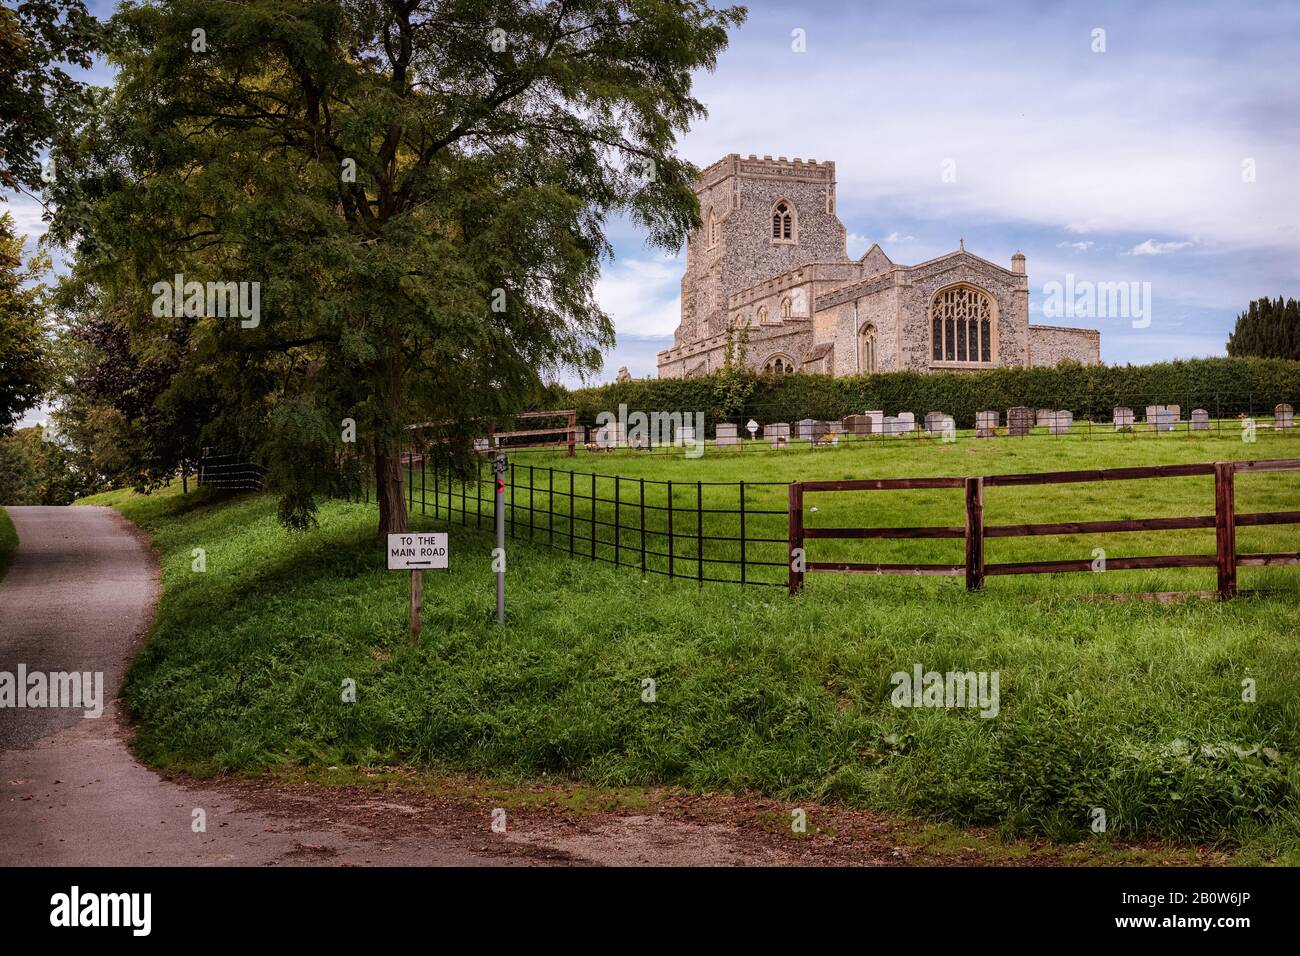 Dalham Church Rural English Countryside Stock Photo